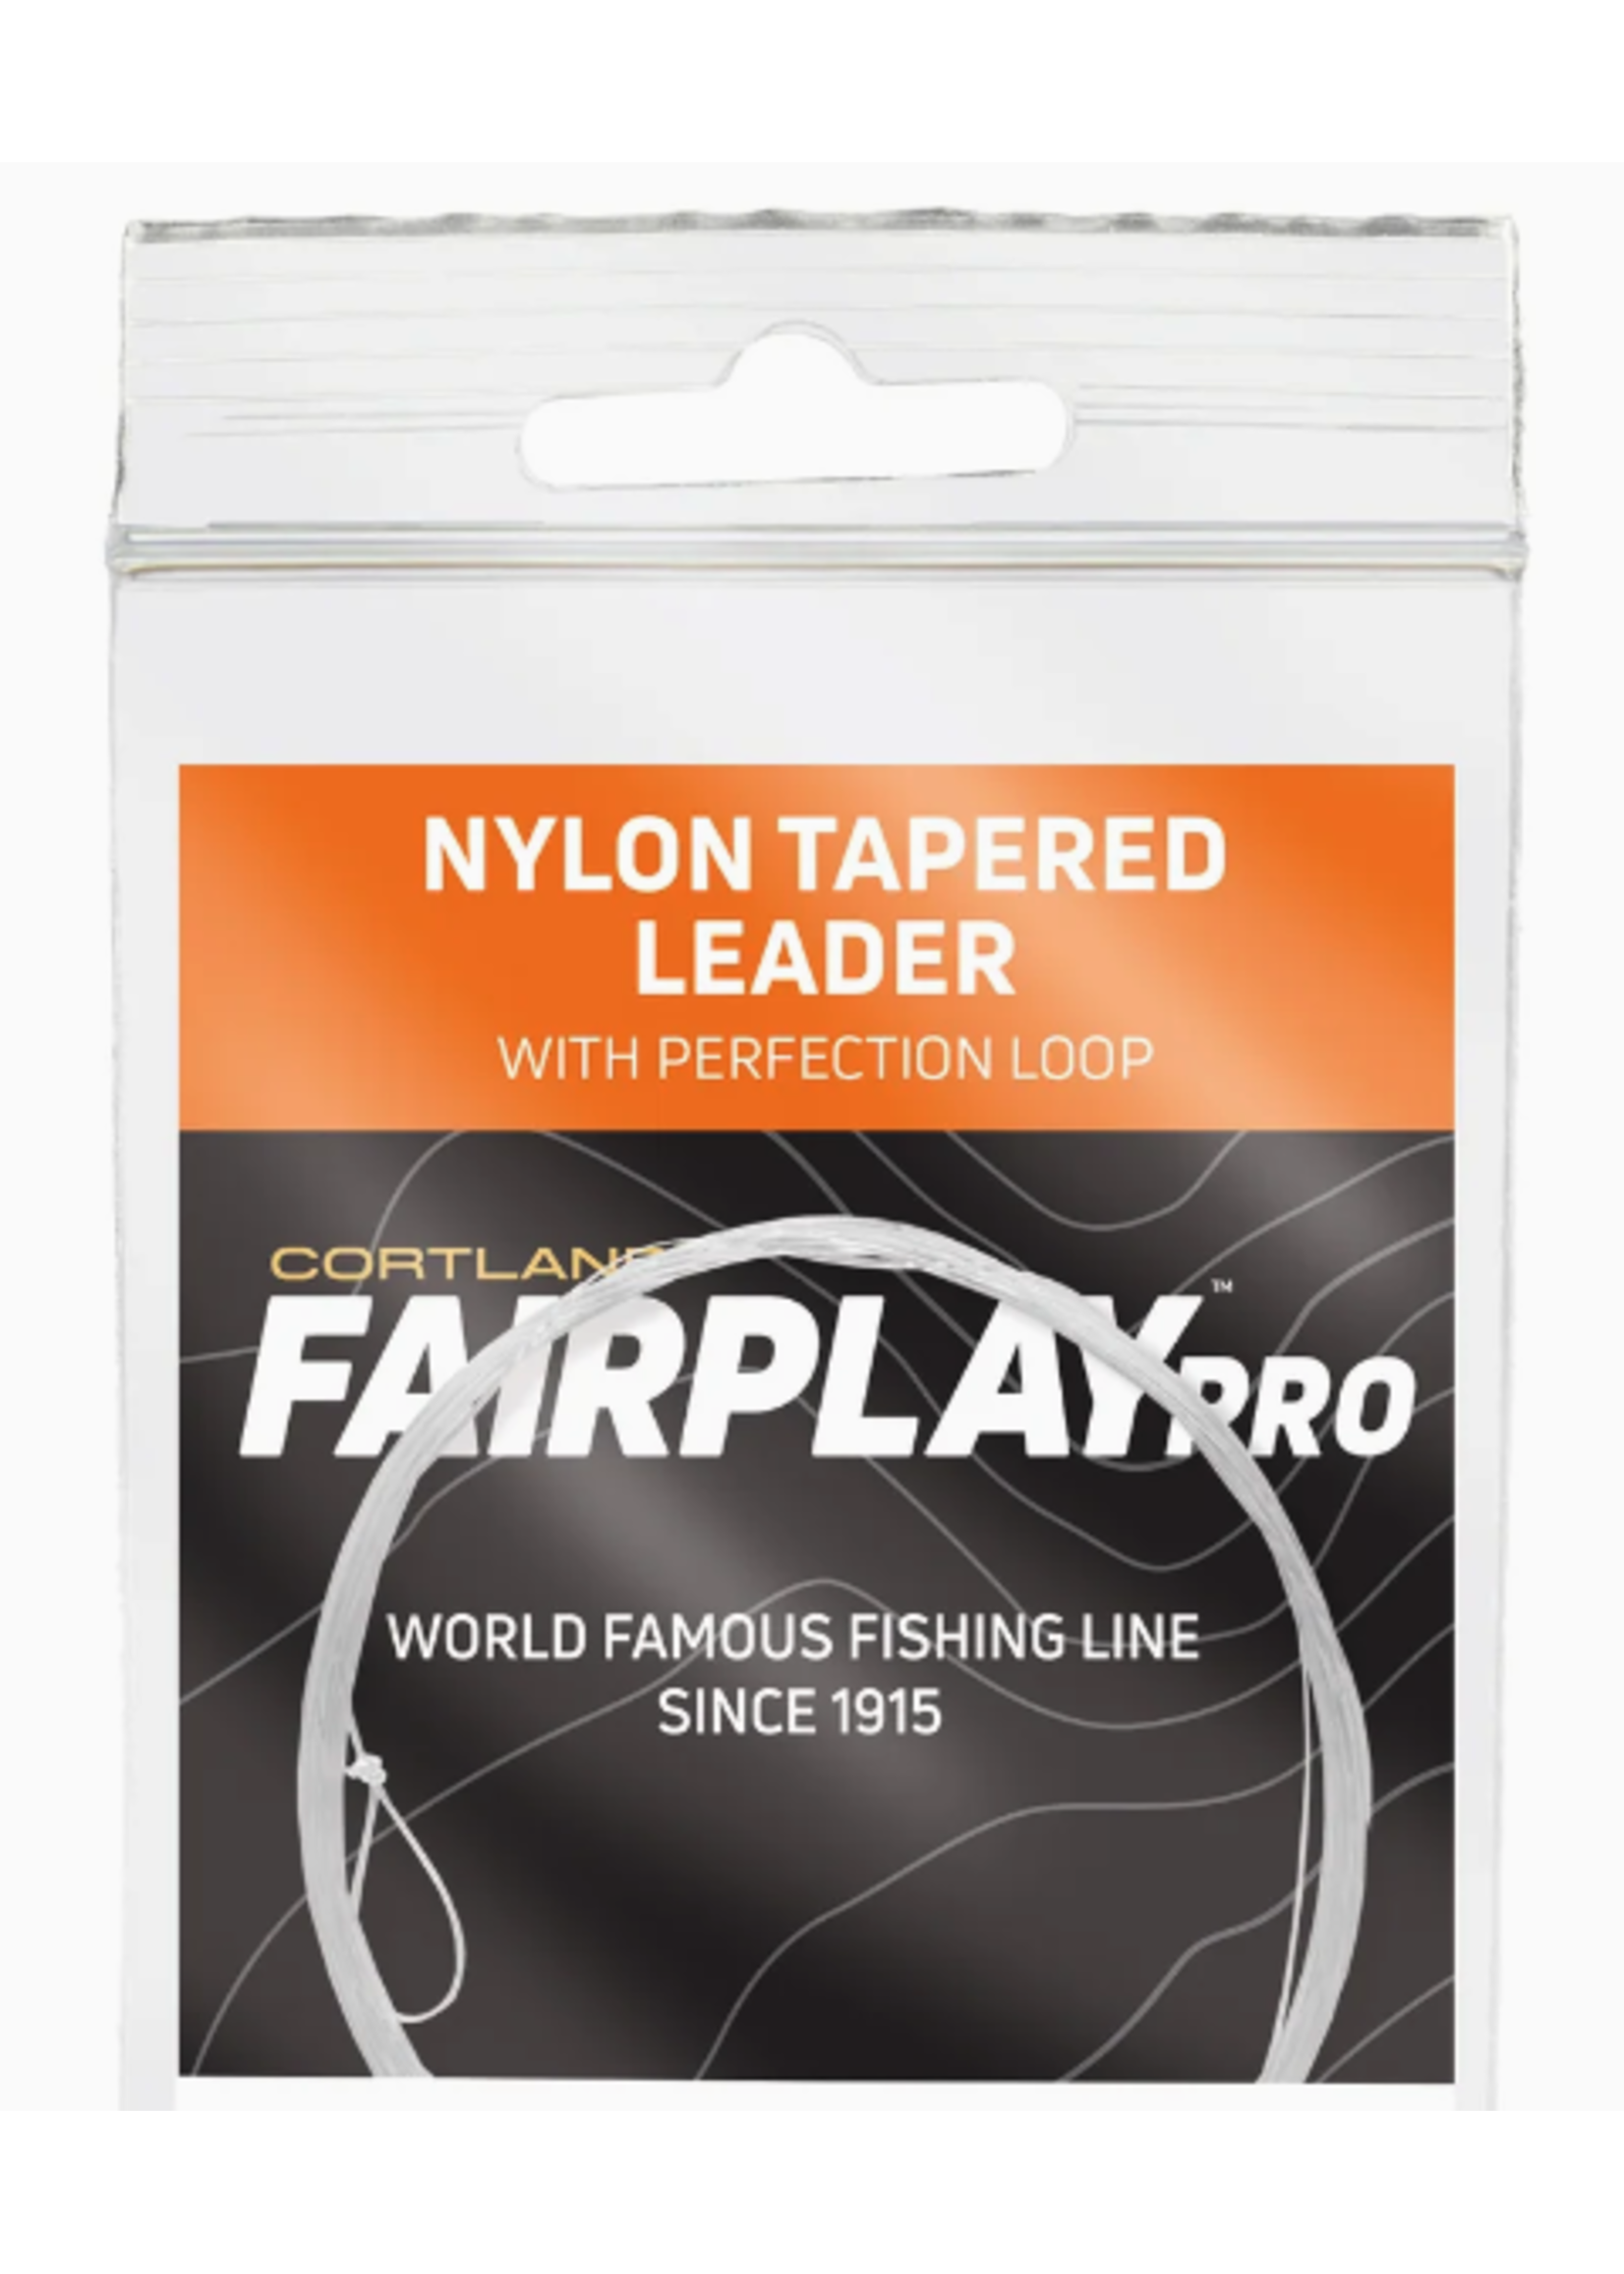 Cortland Fairplay Pro Nylon Tapered Leaders 5X-4.5 LB